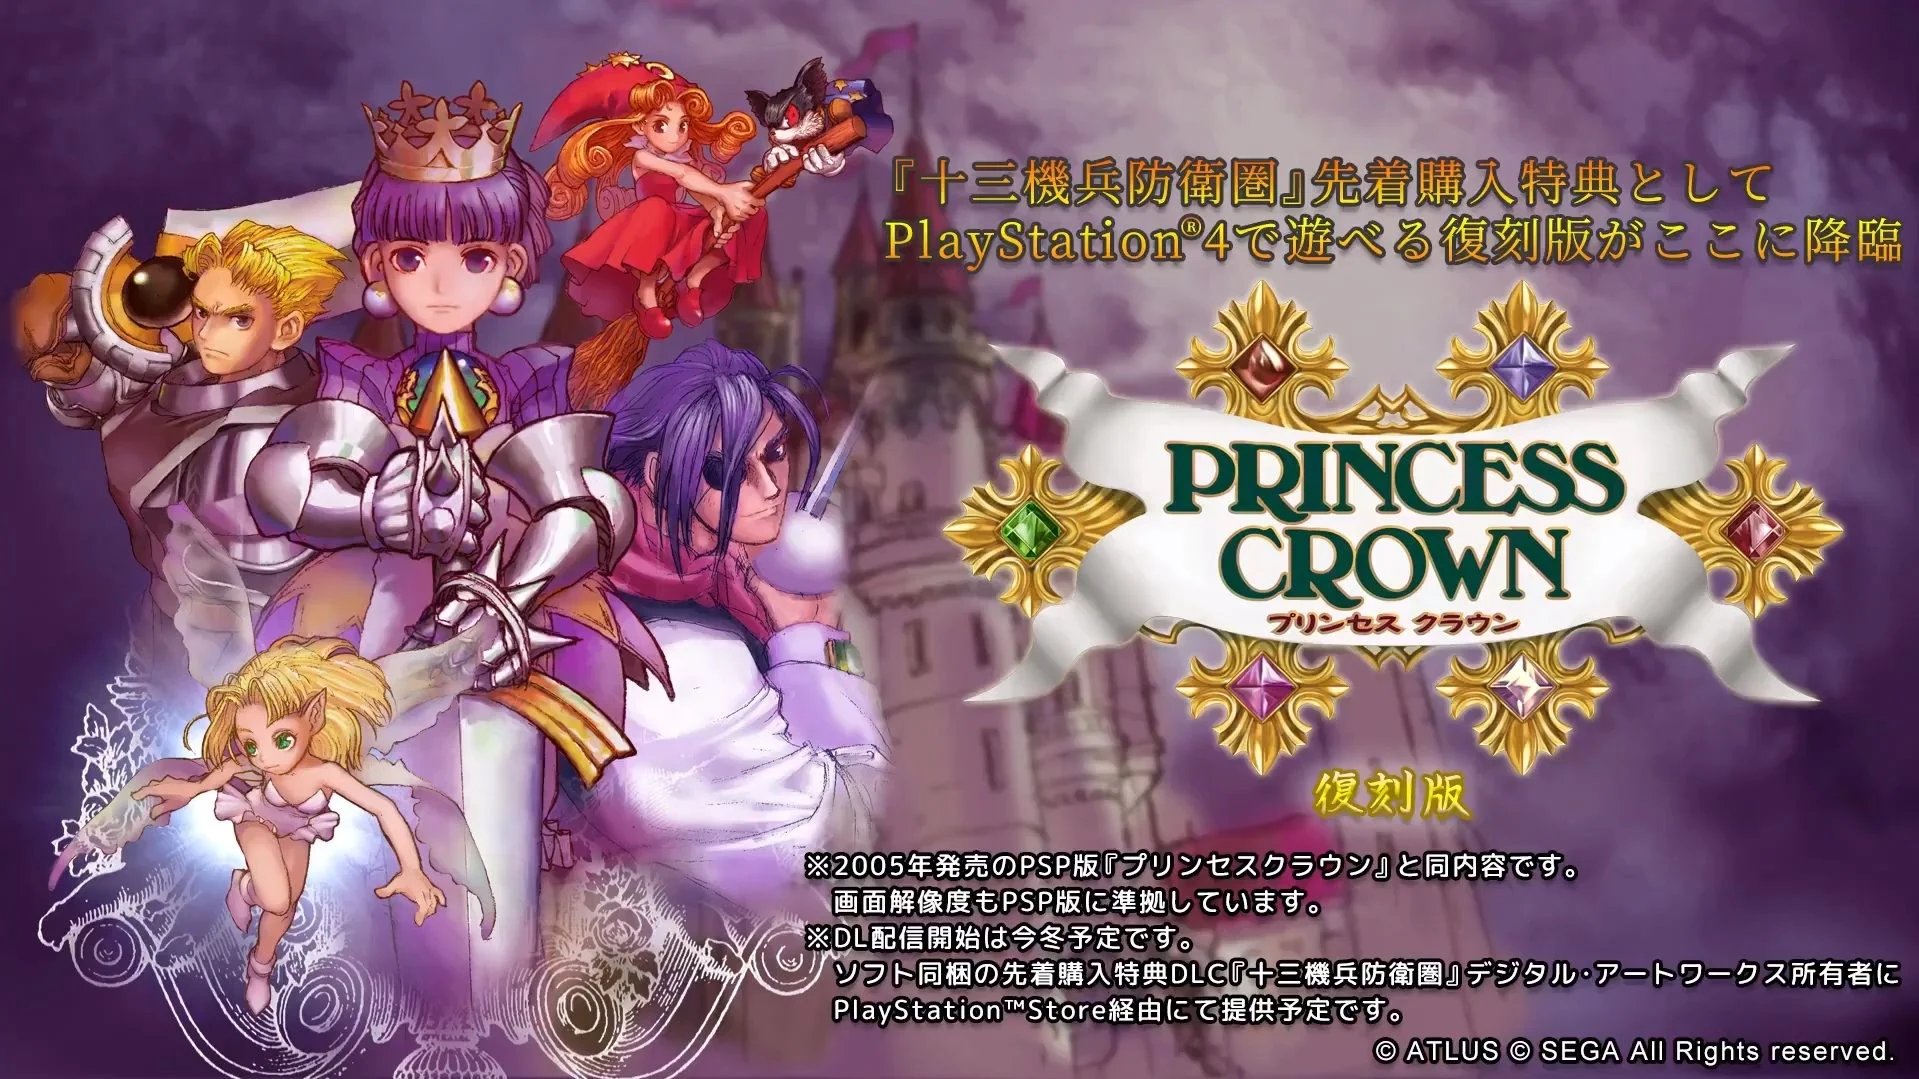 Princess Crown выпустят на PS4 как DLC к 13 Sentinels: Aegis Rim - фото 1